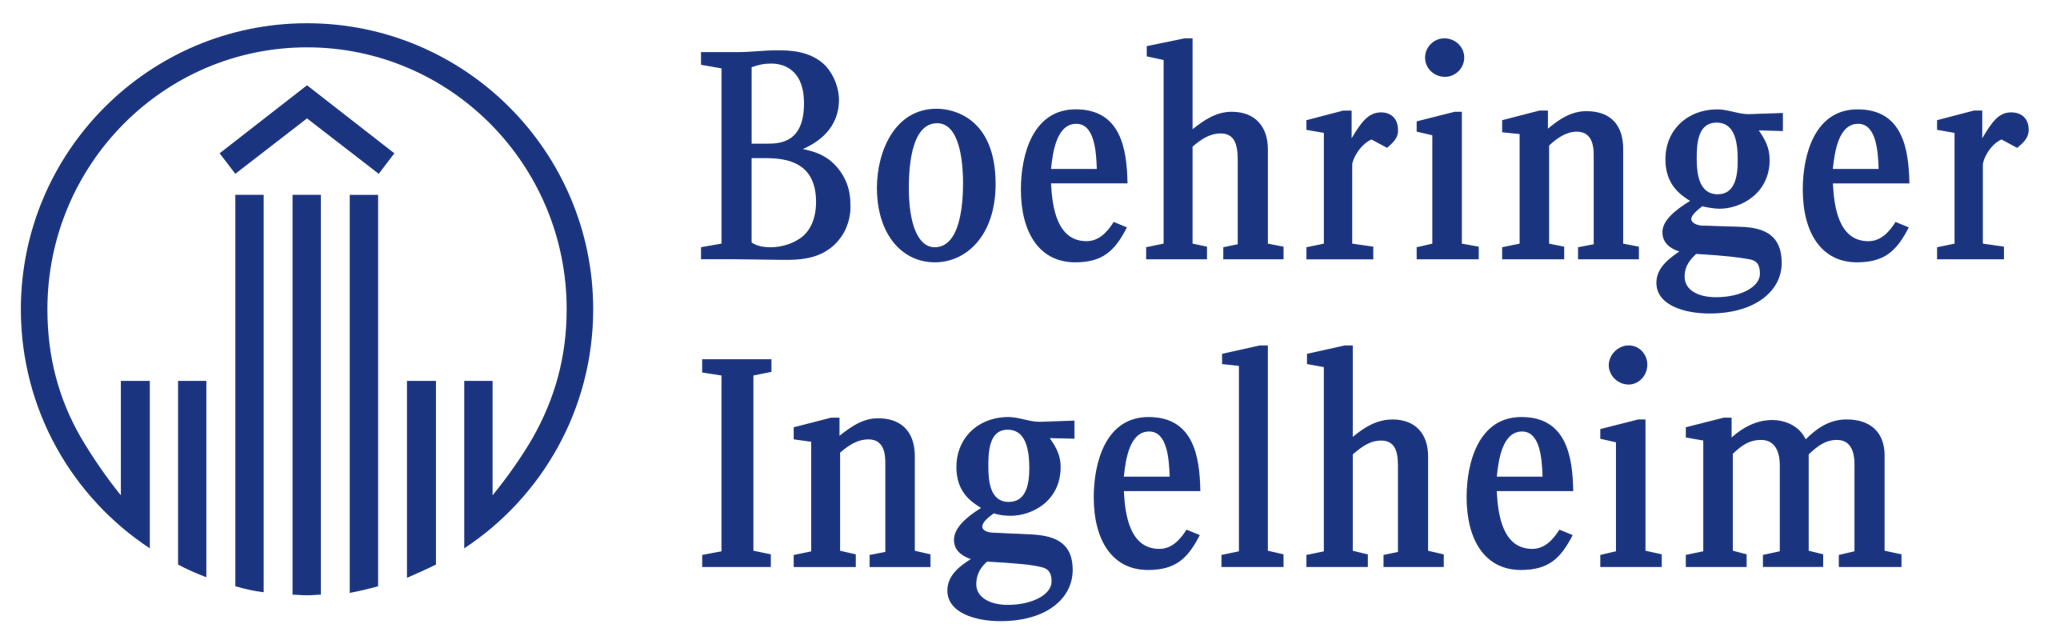 boehringer-ingelheim-logo-medium.jpg